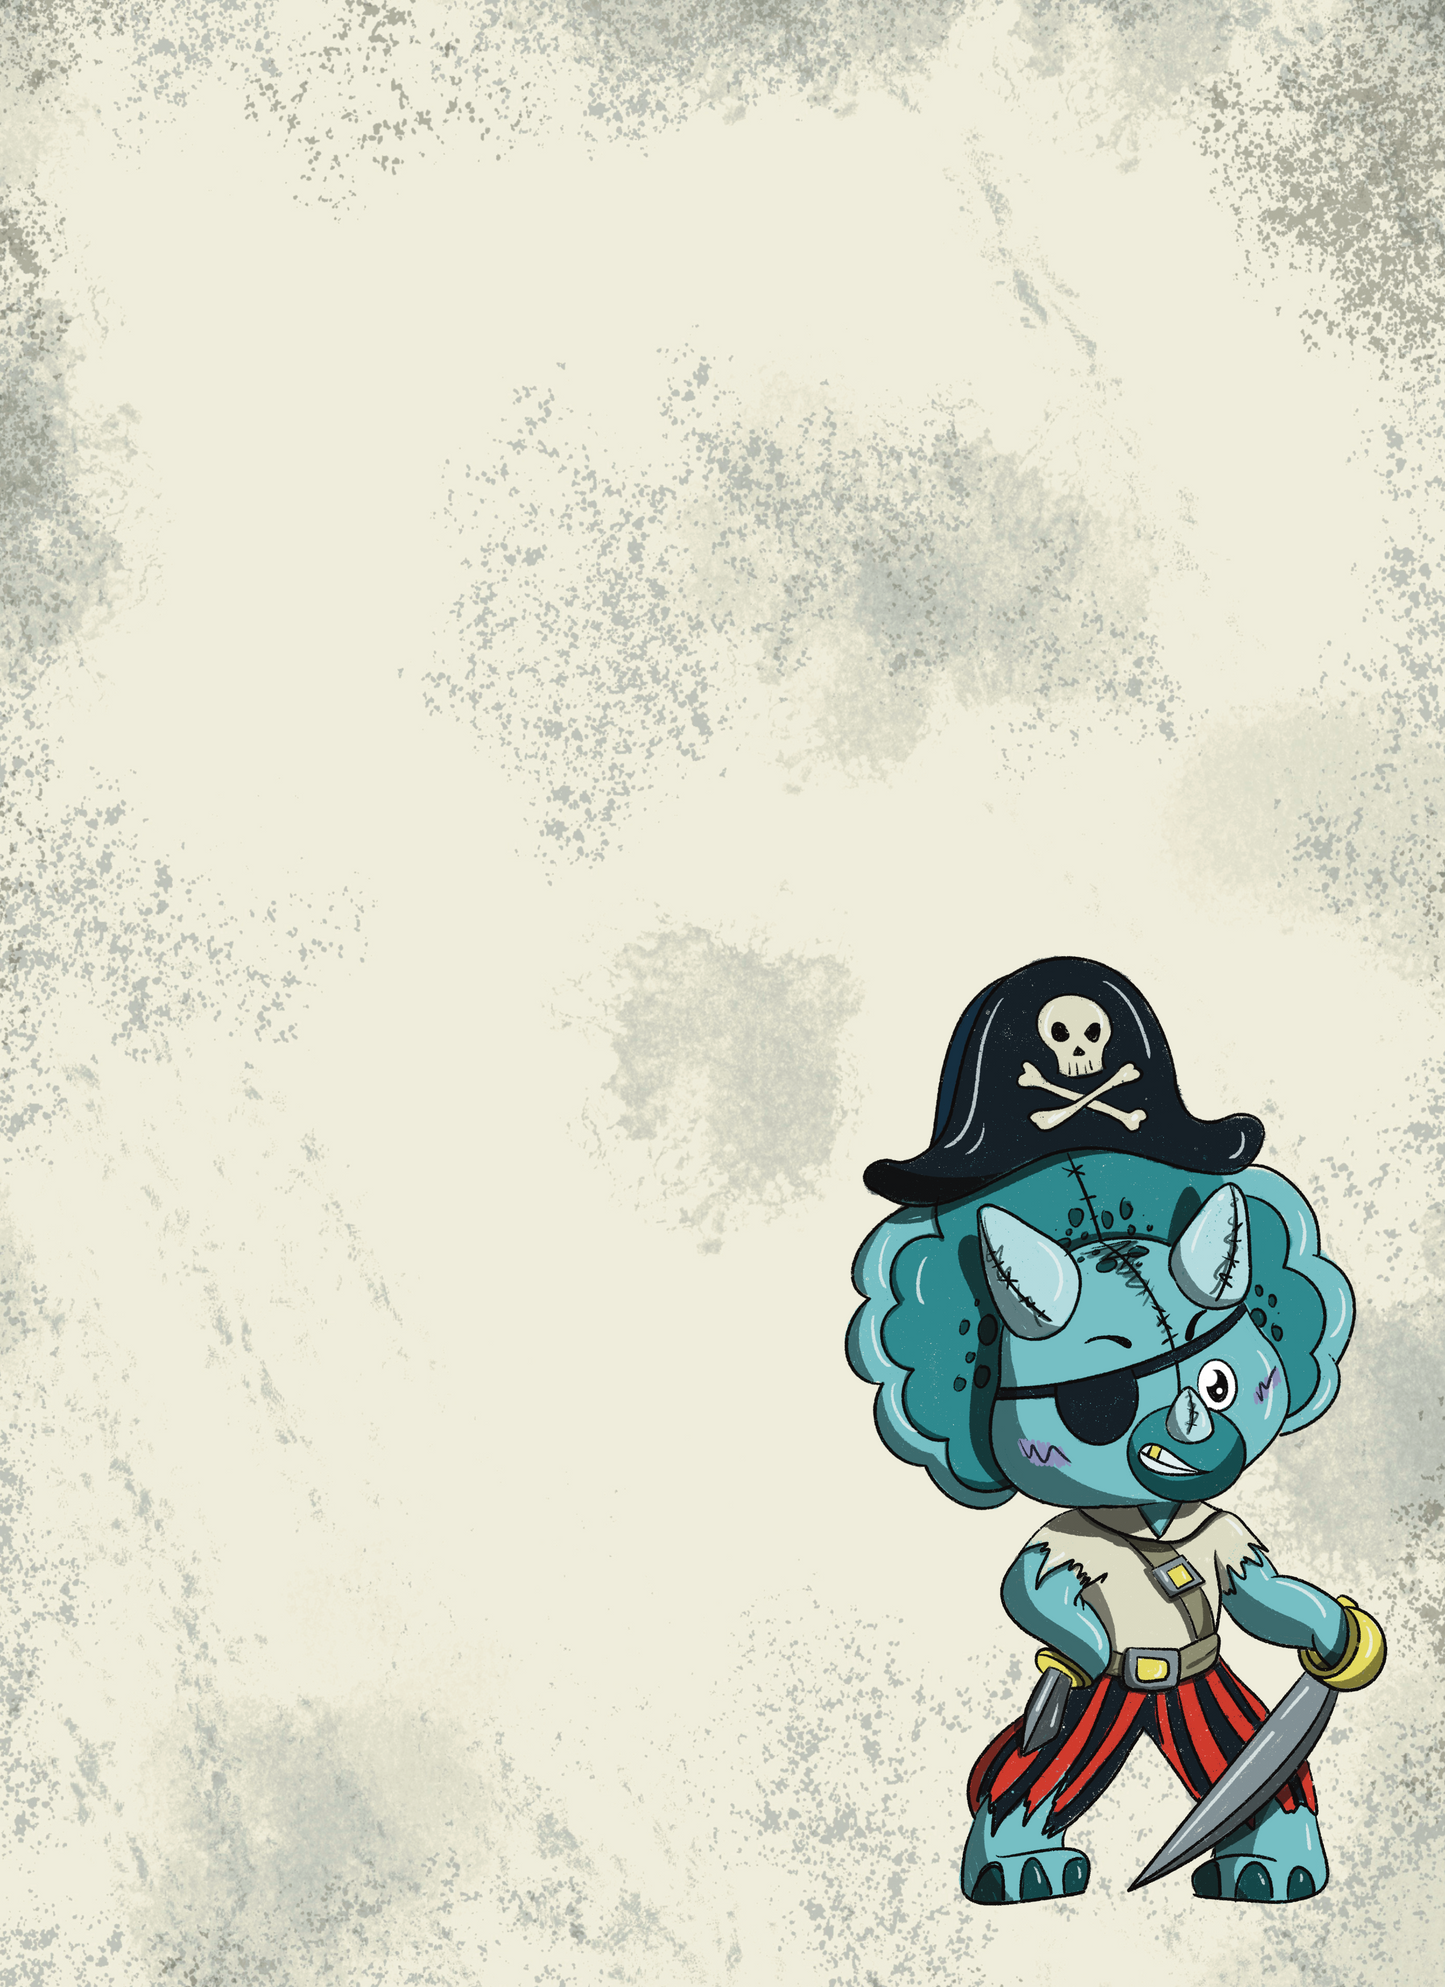 Topsy (Pirate)